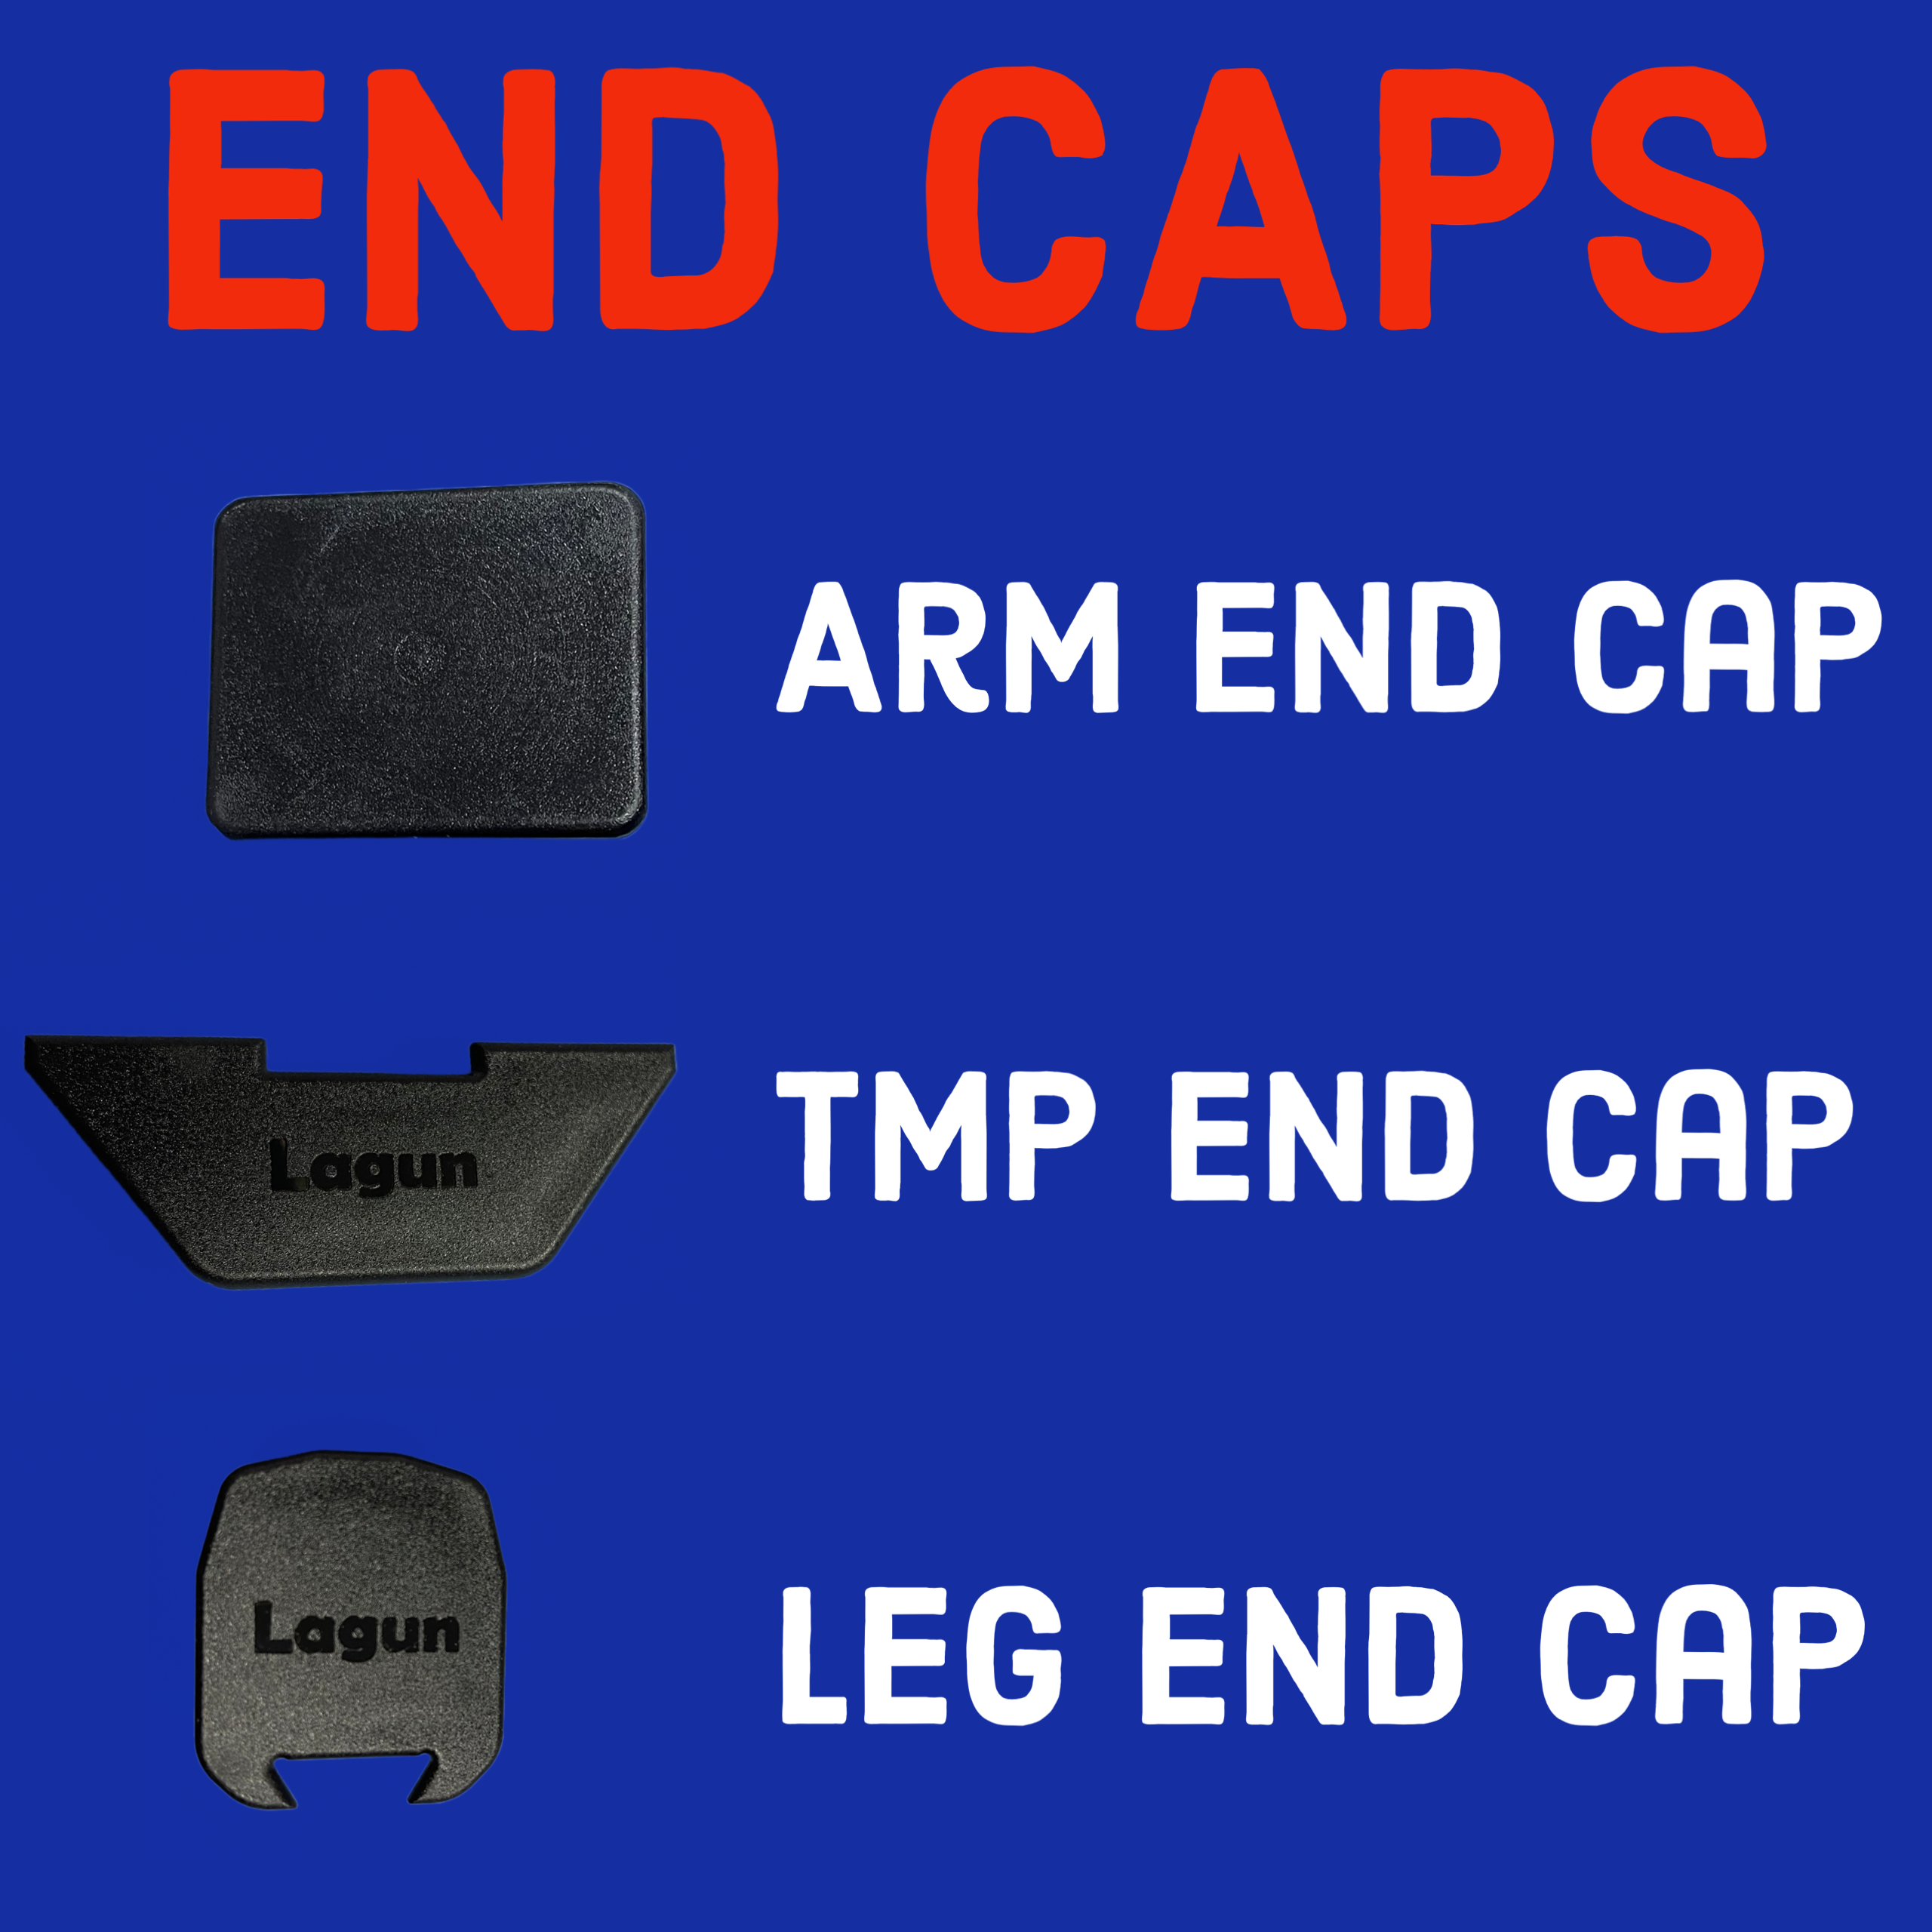 End Caps